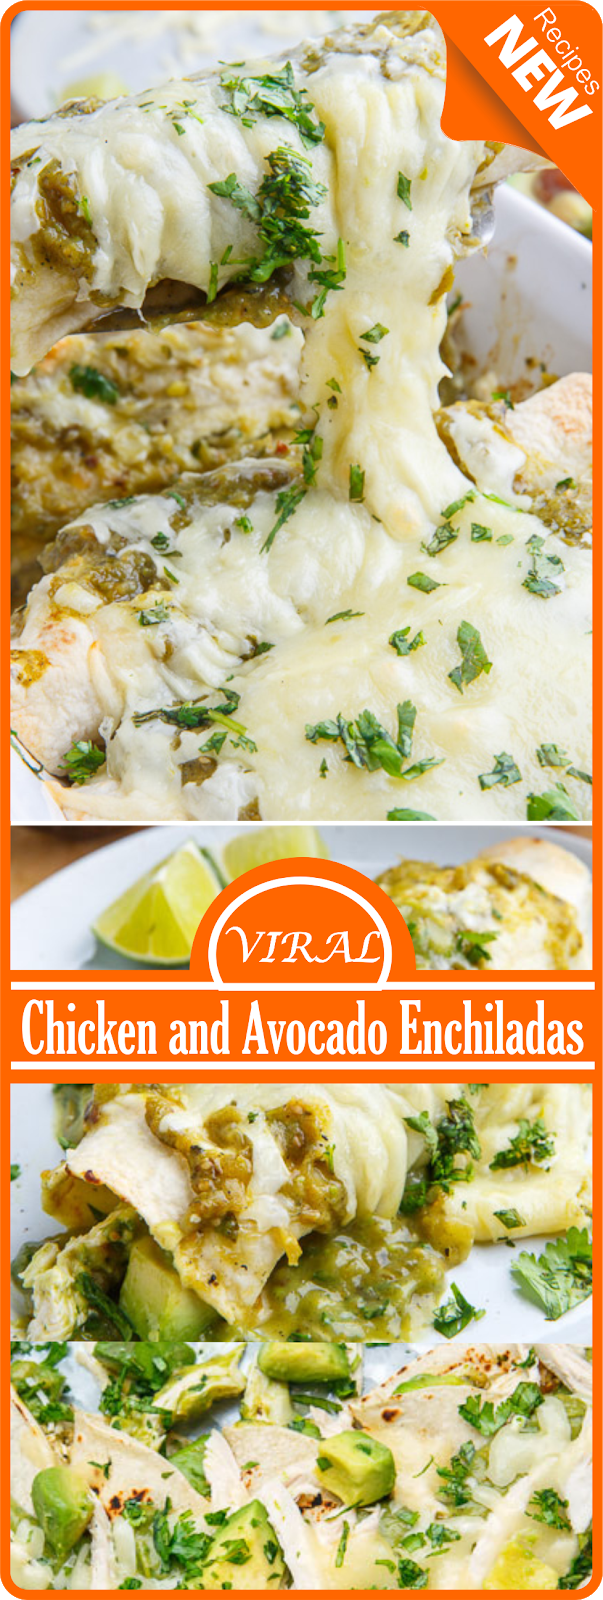 Chicken and Avocado Enchiladas | Think food